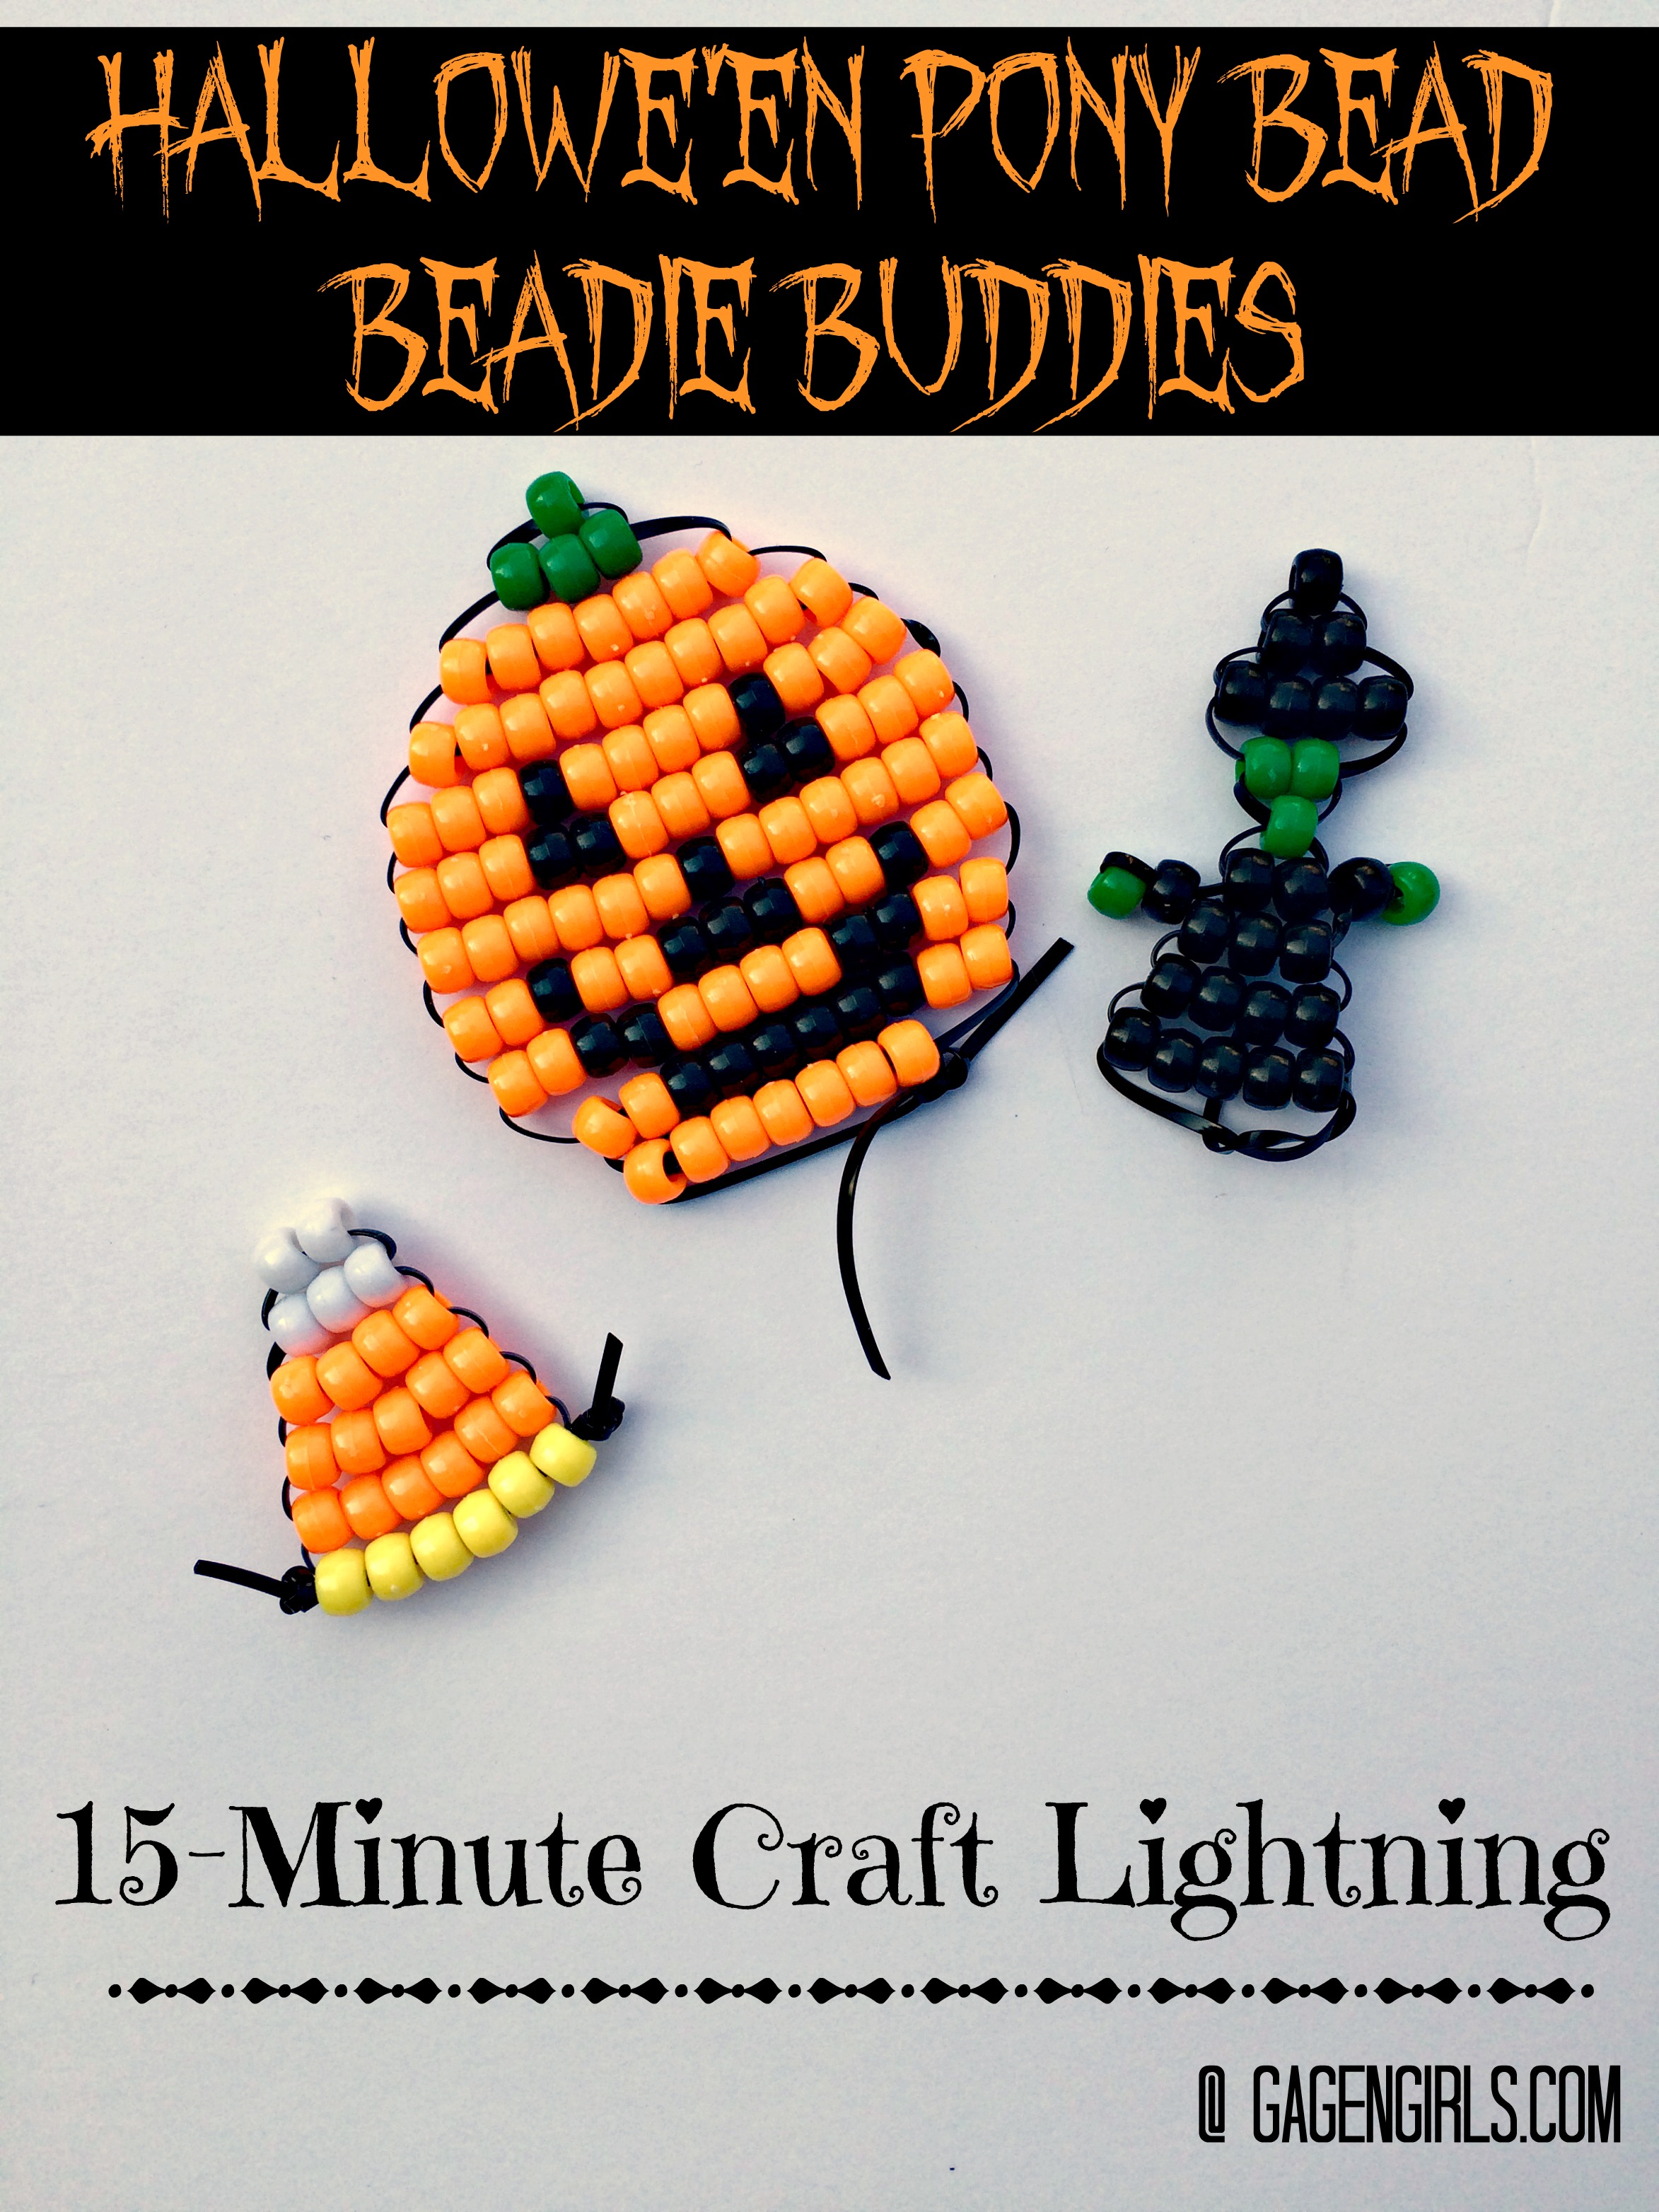 Hallowe'en Pony Bead Beadie Buddies 15-Minute Craft Lightning @ GagenGirls.com